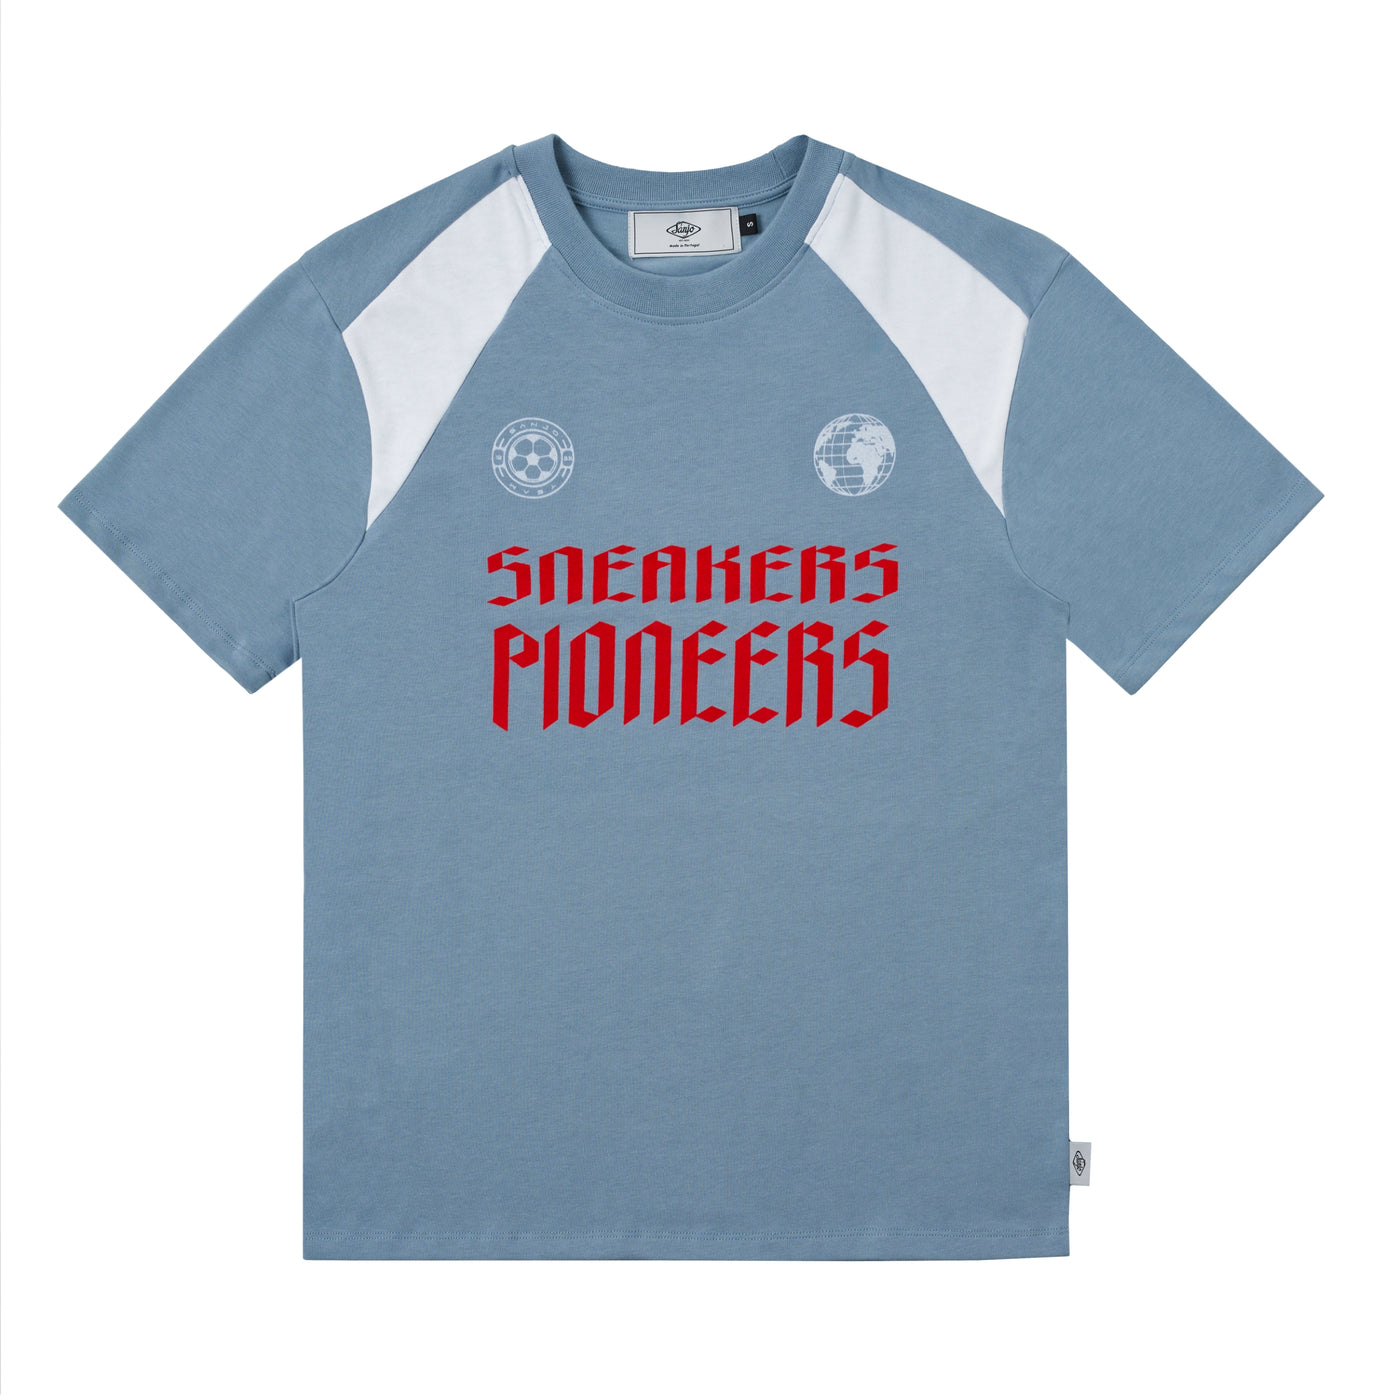 Sanjo Sneakers Pioners T-shirt // Sky